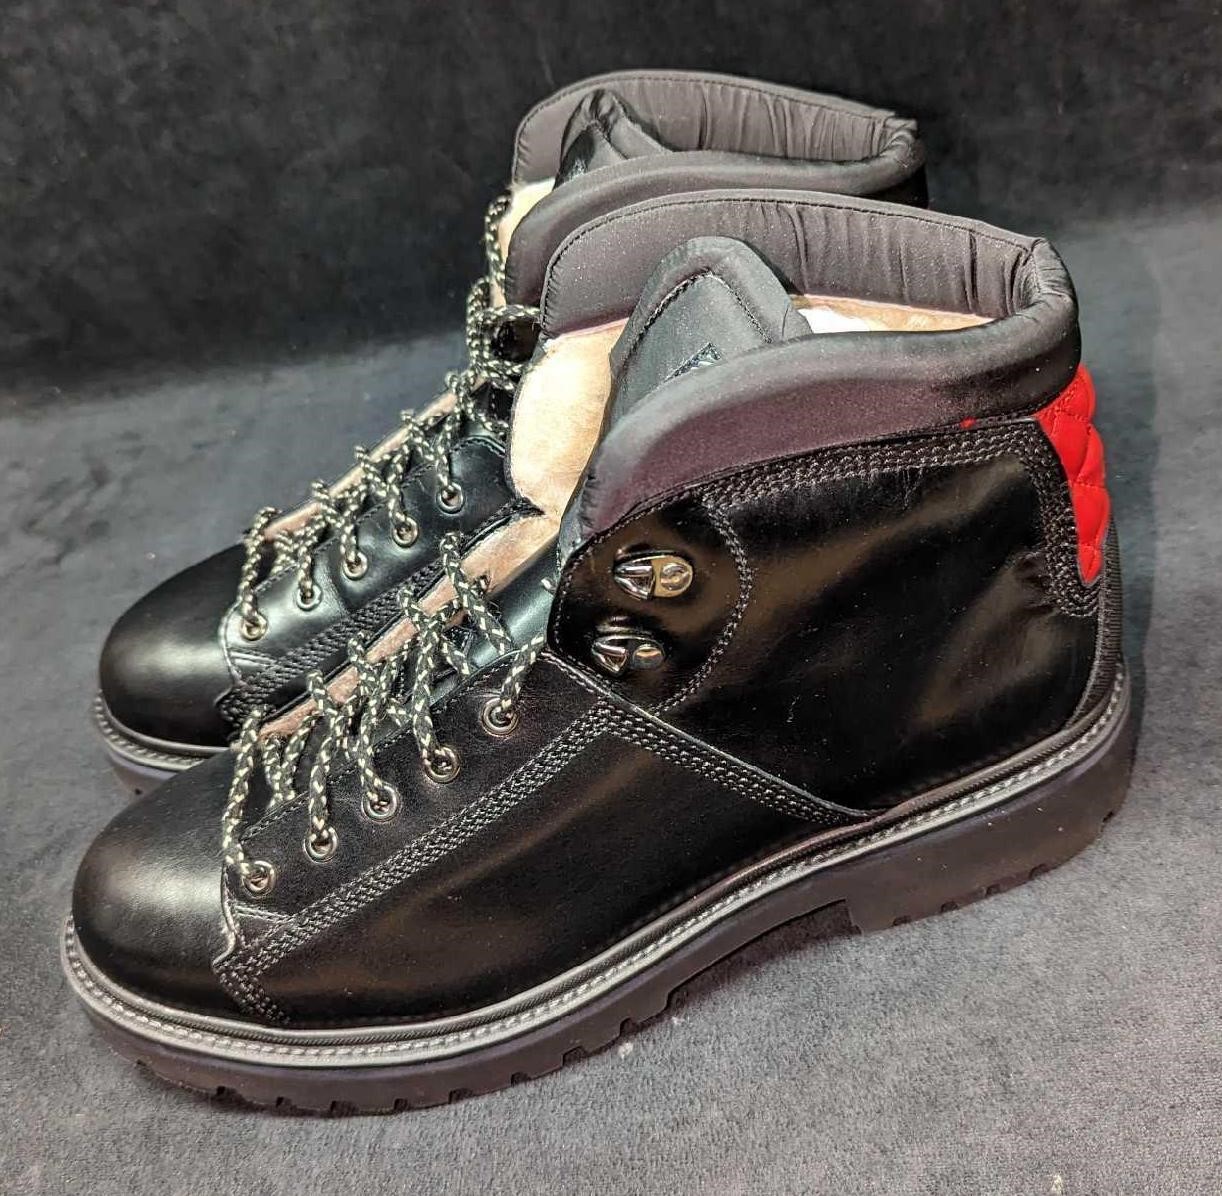 Men's 11.5 FABI Black Leather Hiking Boots